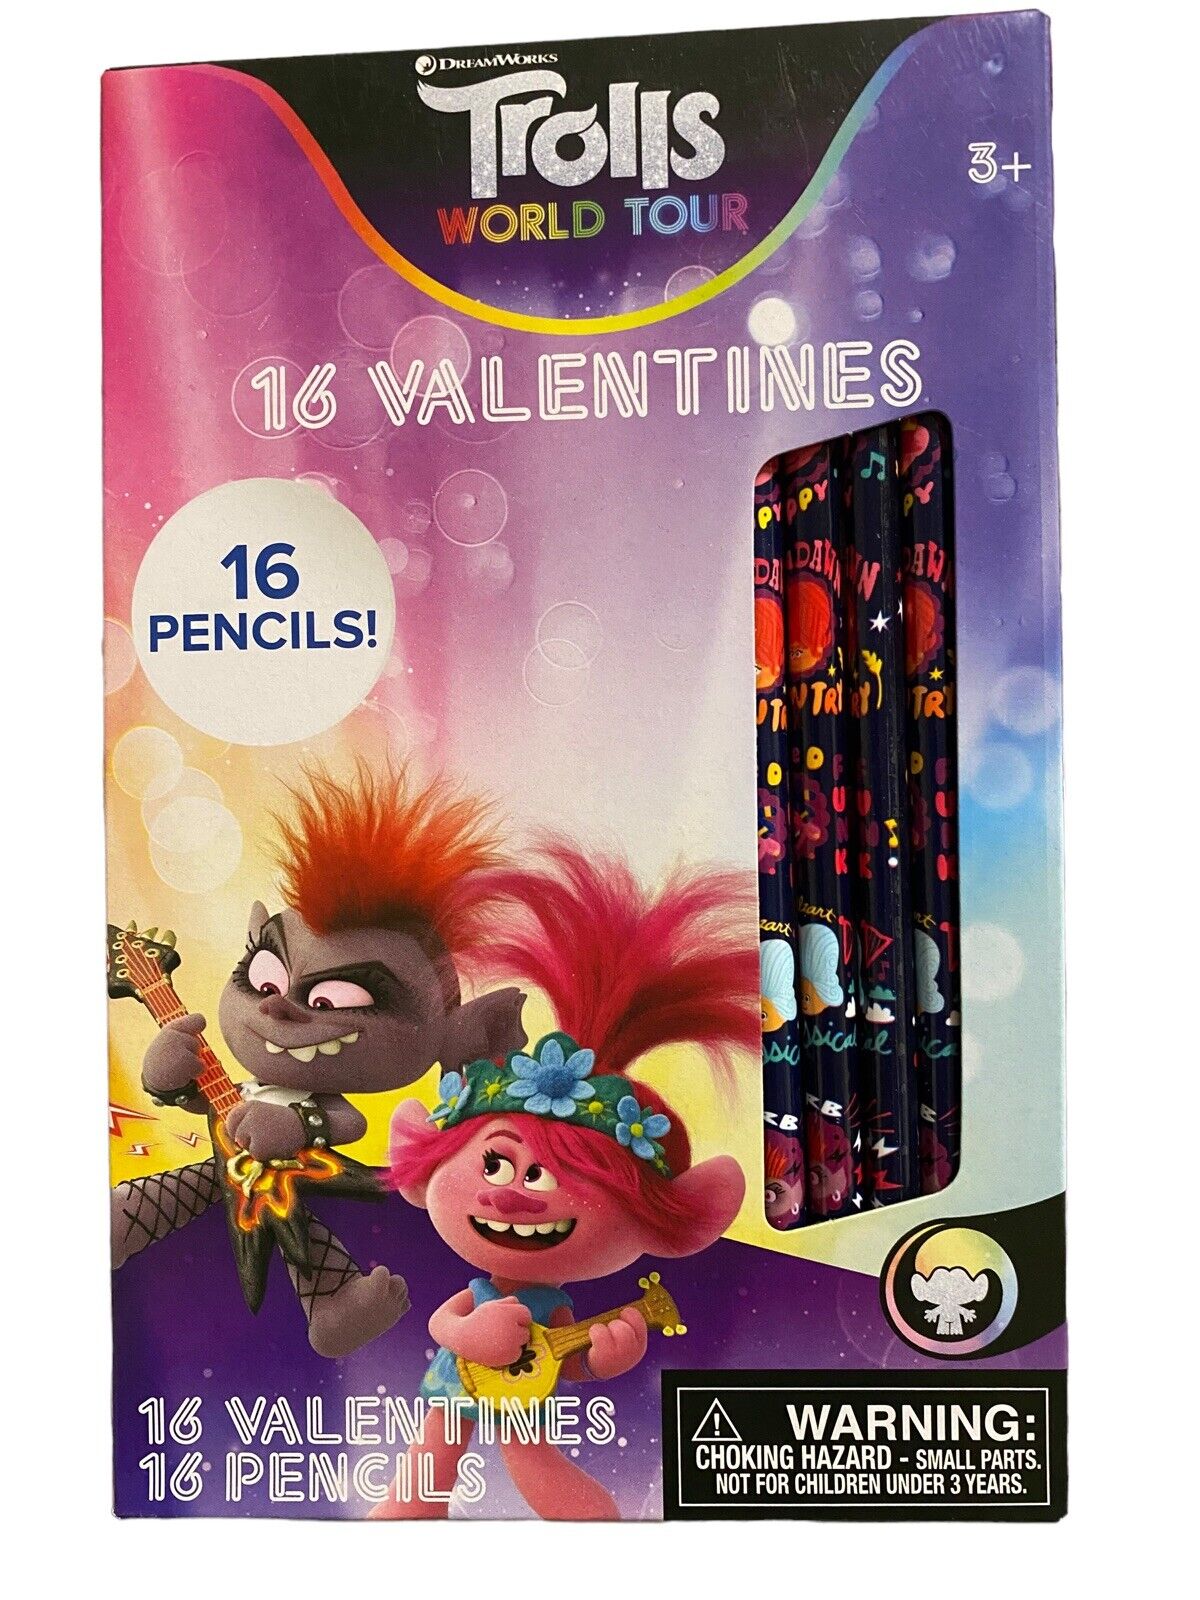 Trolls World Tour 16 Valentine Cards & 16 Pencils ~ New